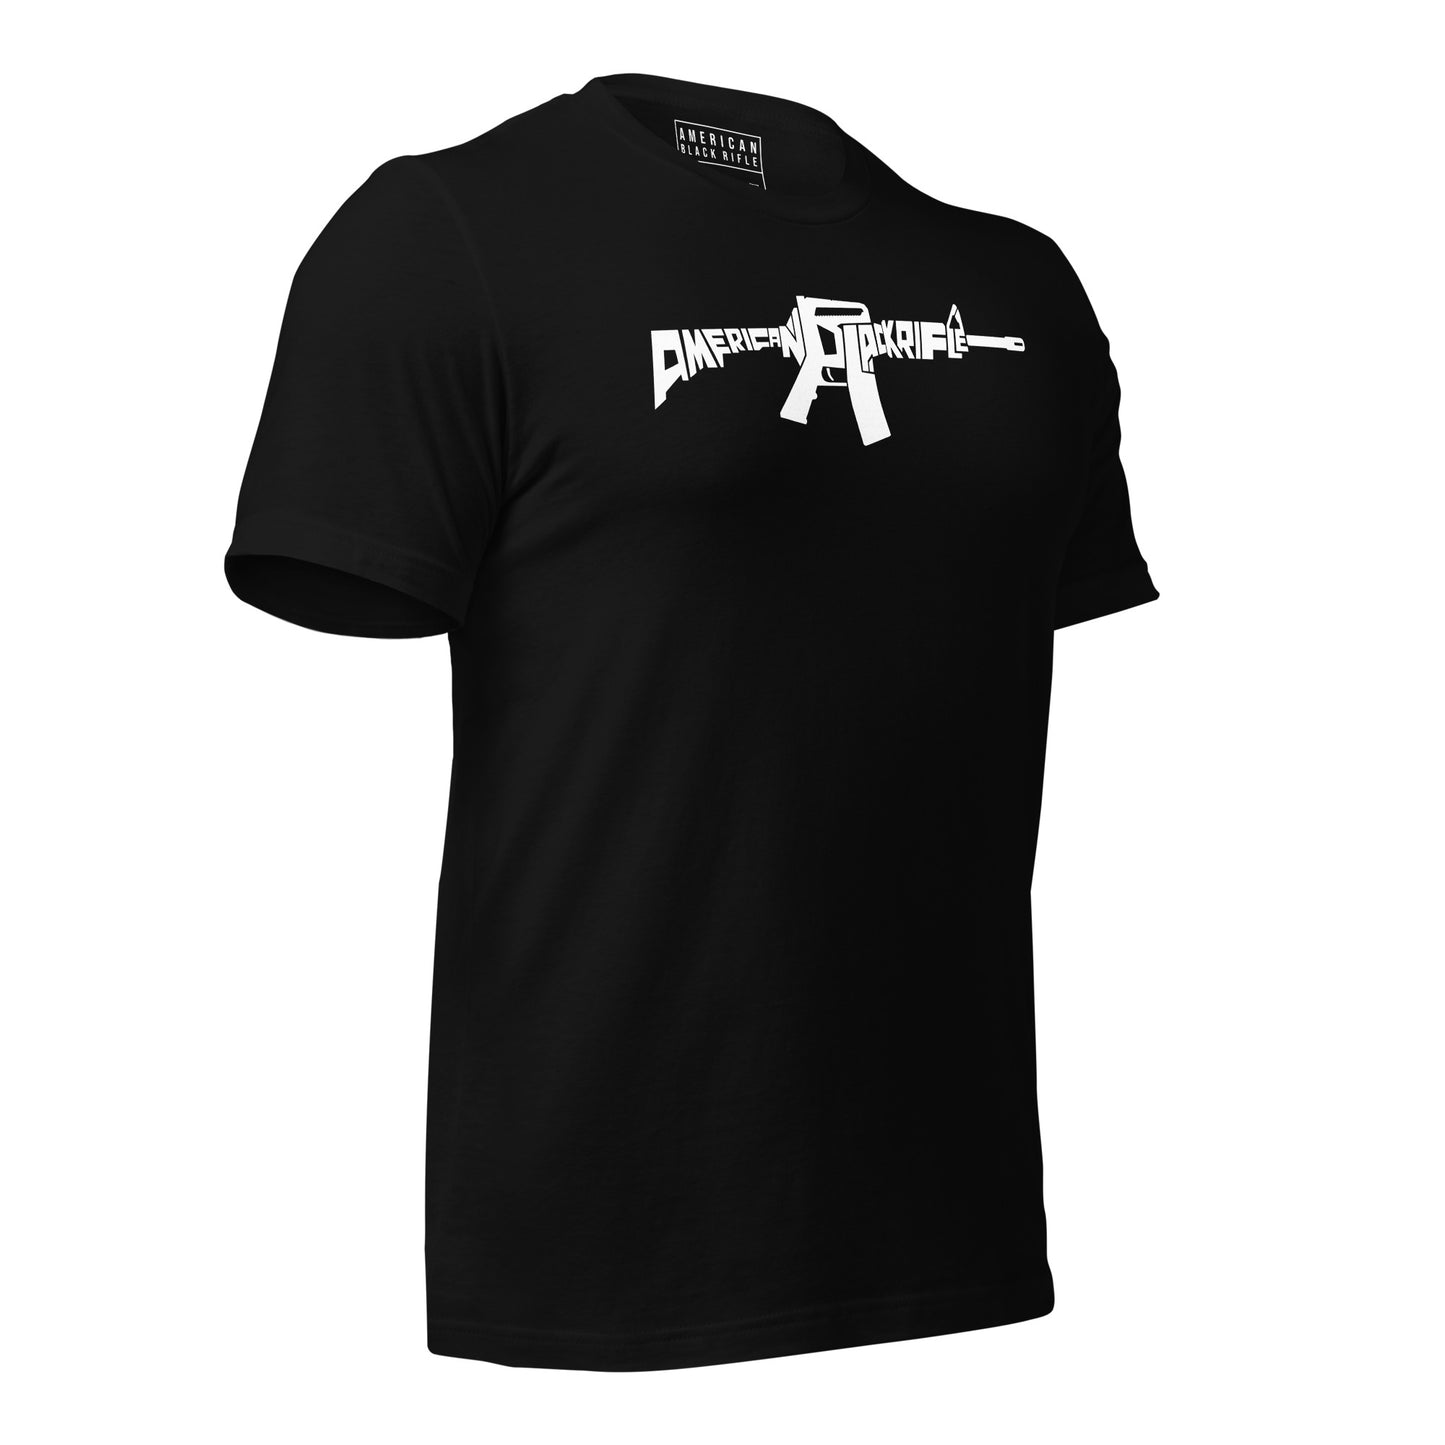 America Black Rifle ADA Unisex t-shirt